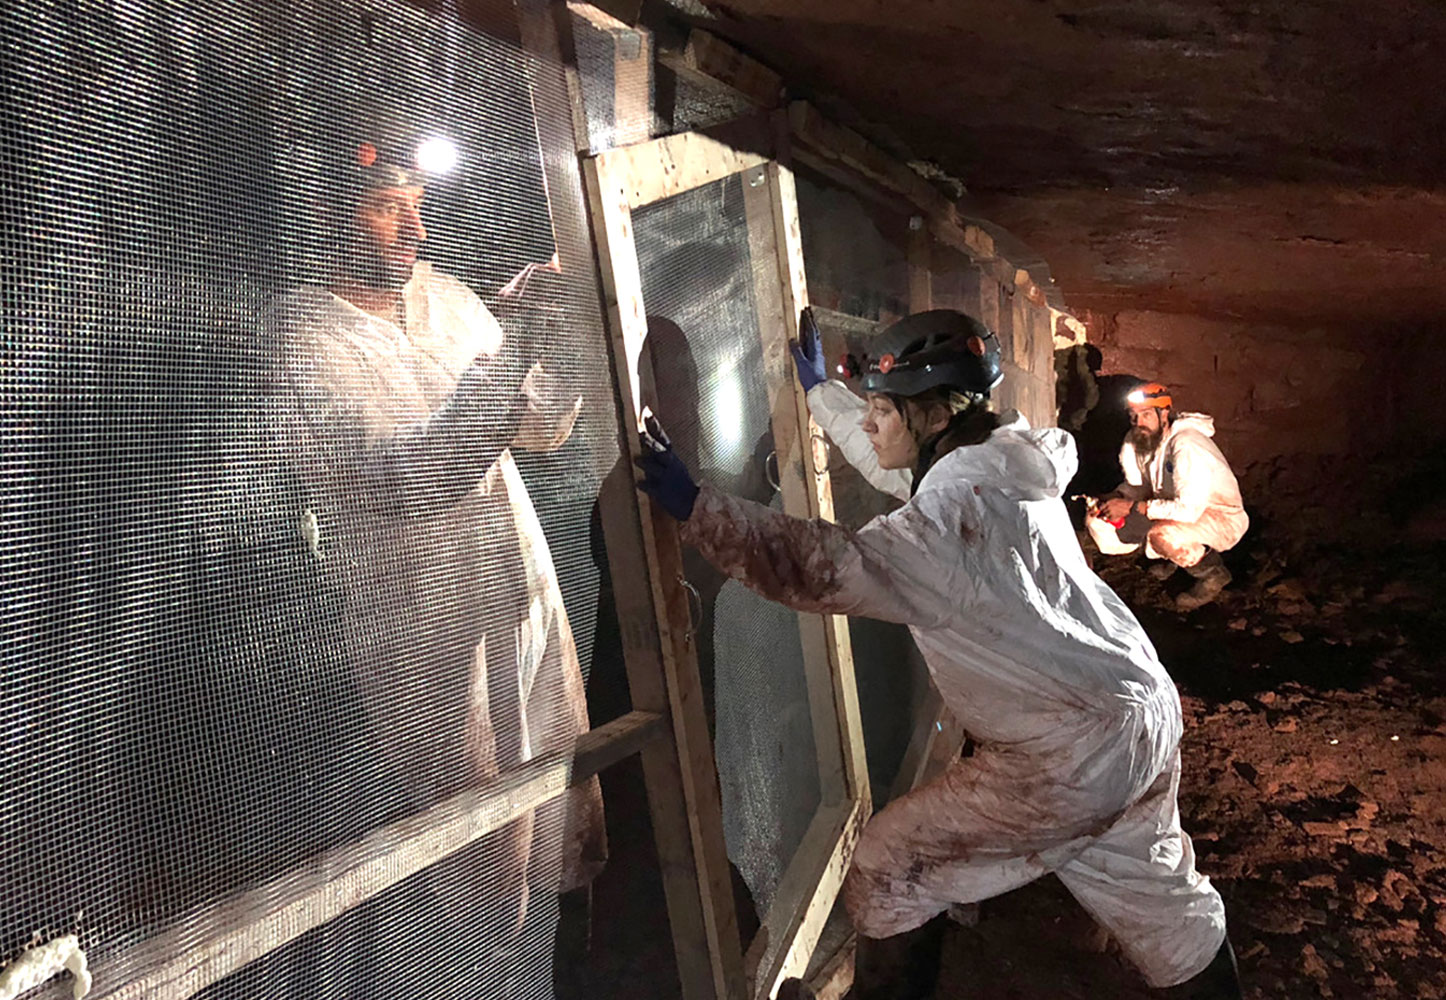 Researchers seal off a test area inside a bat hibernation site.